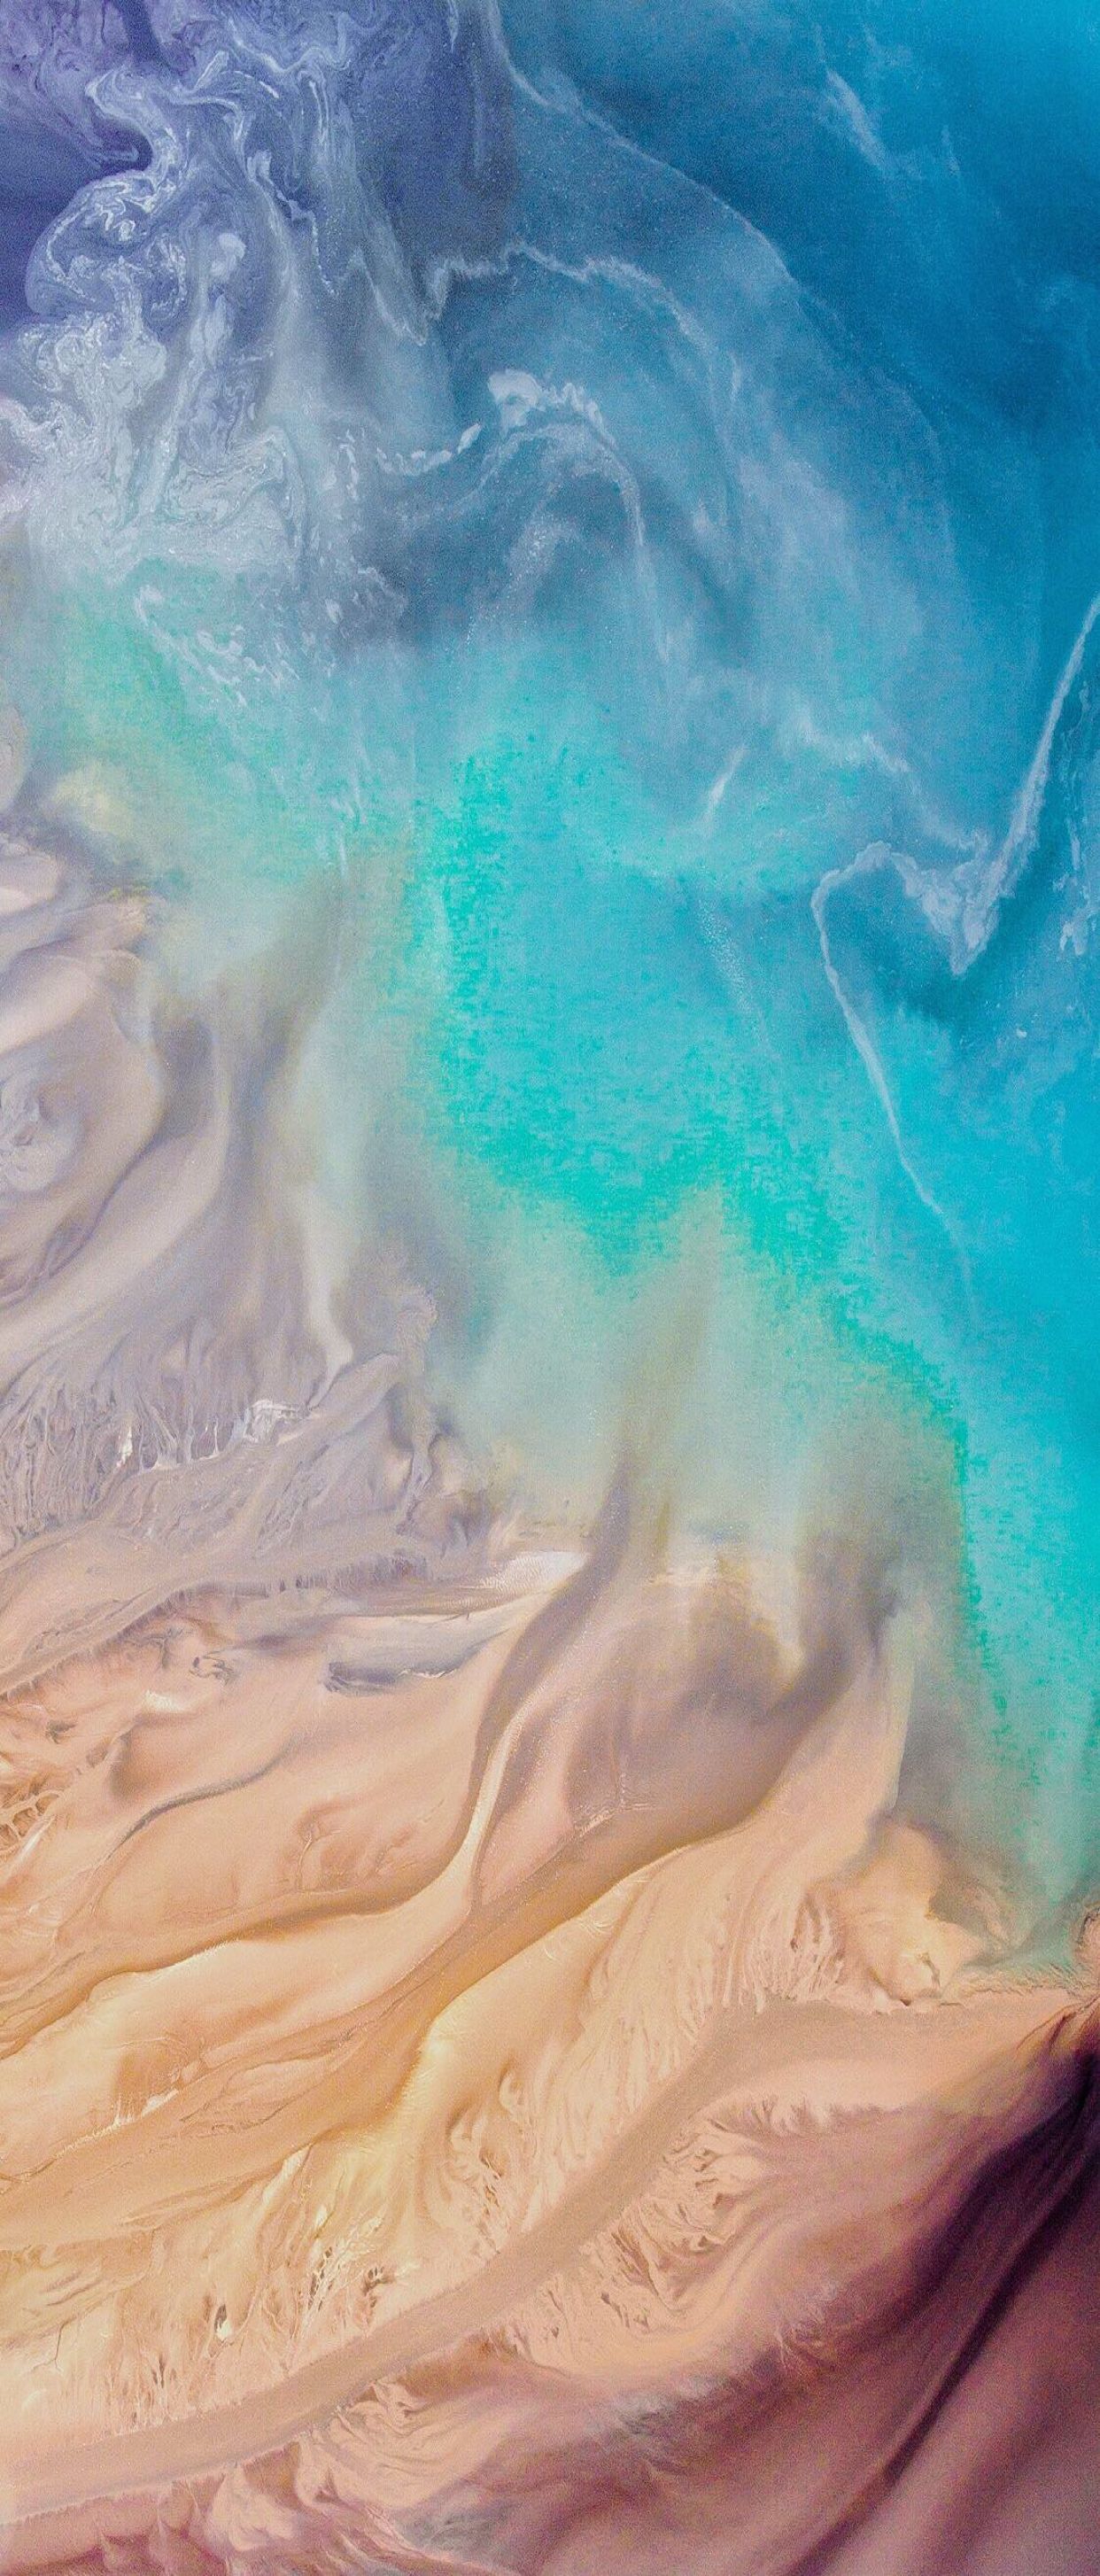 Free download iOS 11 iPhone X Aqua blue Water beach wave ocean apple [1242x2908] for your Desktop, Mobile & Tablet. Explore 11 iPhone Wallpaper iOS. iPhone iOS Wallpaper, iPhone iOS 9 Wallpaper, iOS 11 Wallpaper